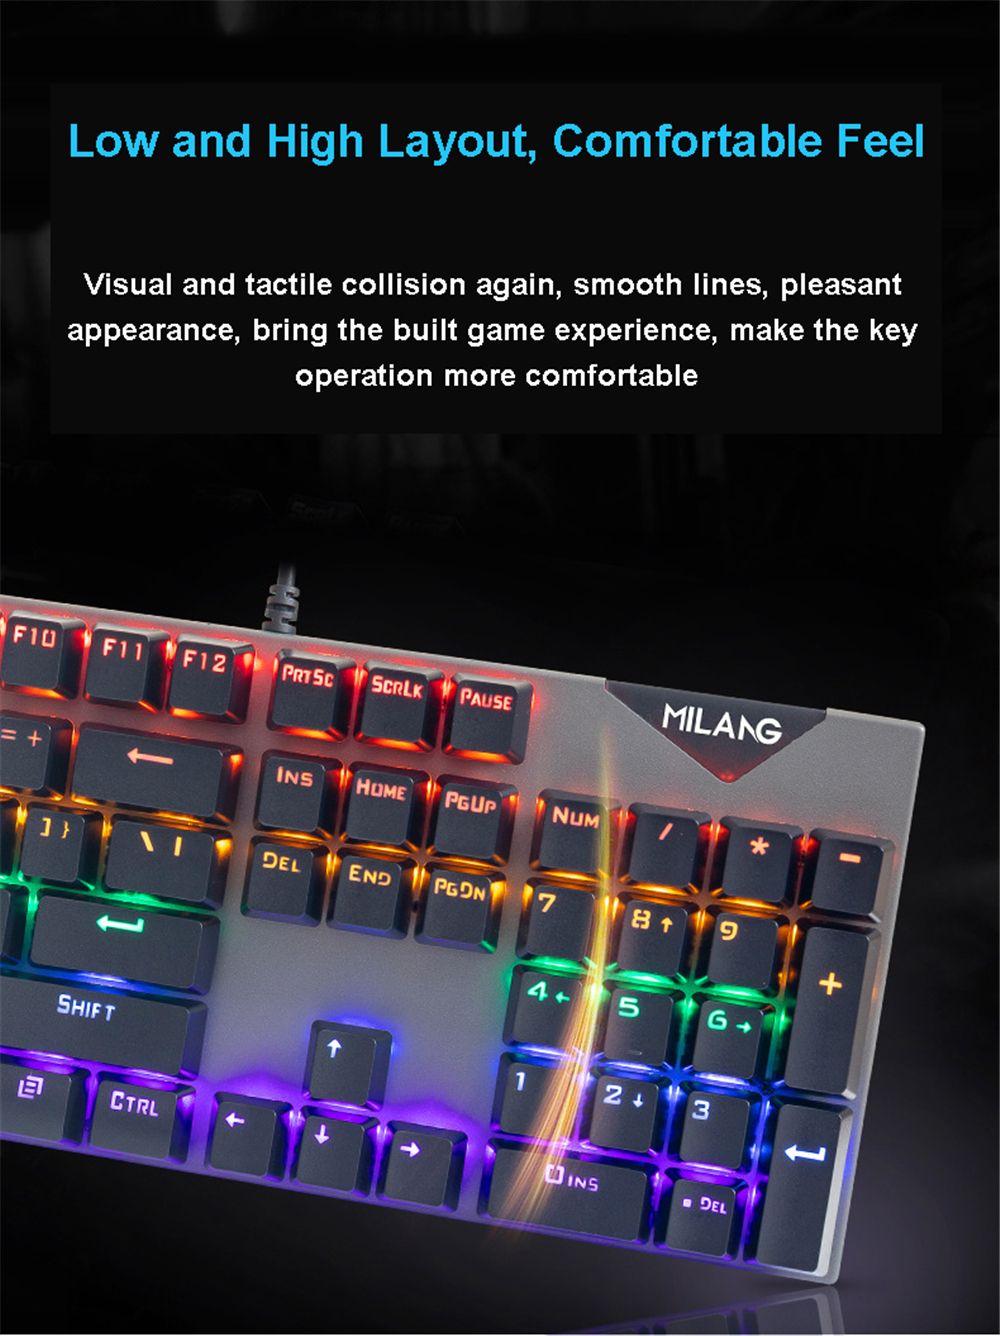 Milang-Mk808-Wired-Mechanical-Keyboard-Blue-Switch-RGB-104-Keys-Keyboard-For-Professional-E-sport-Ga-1748240